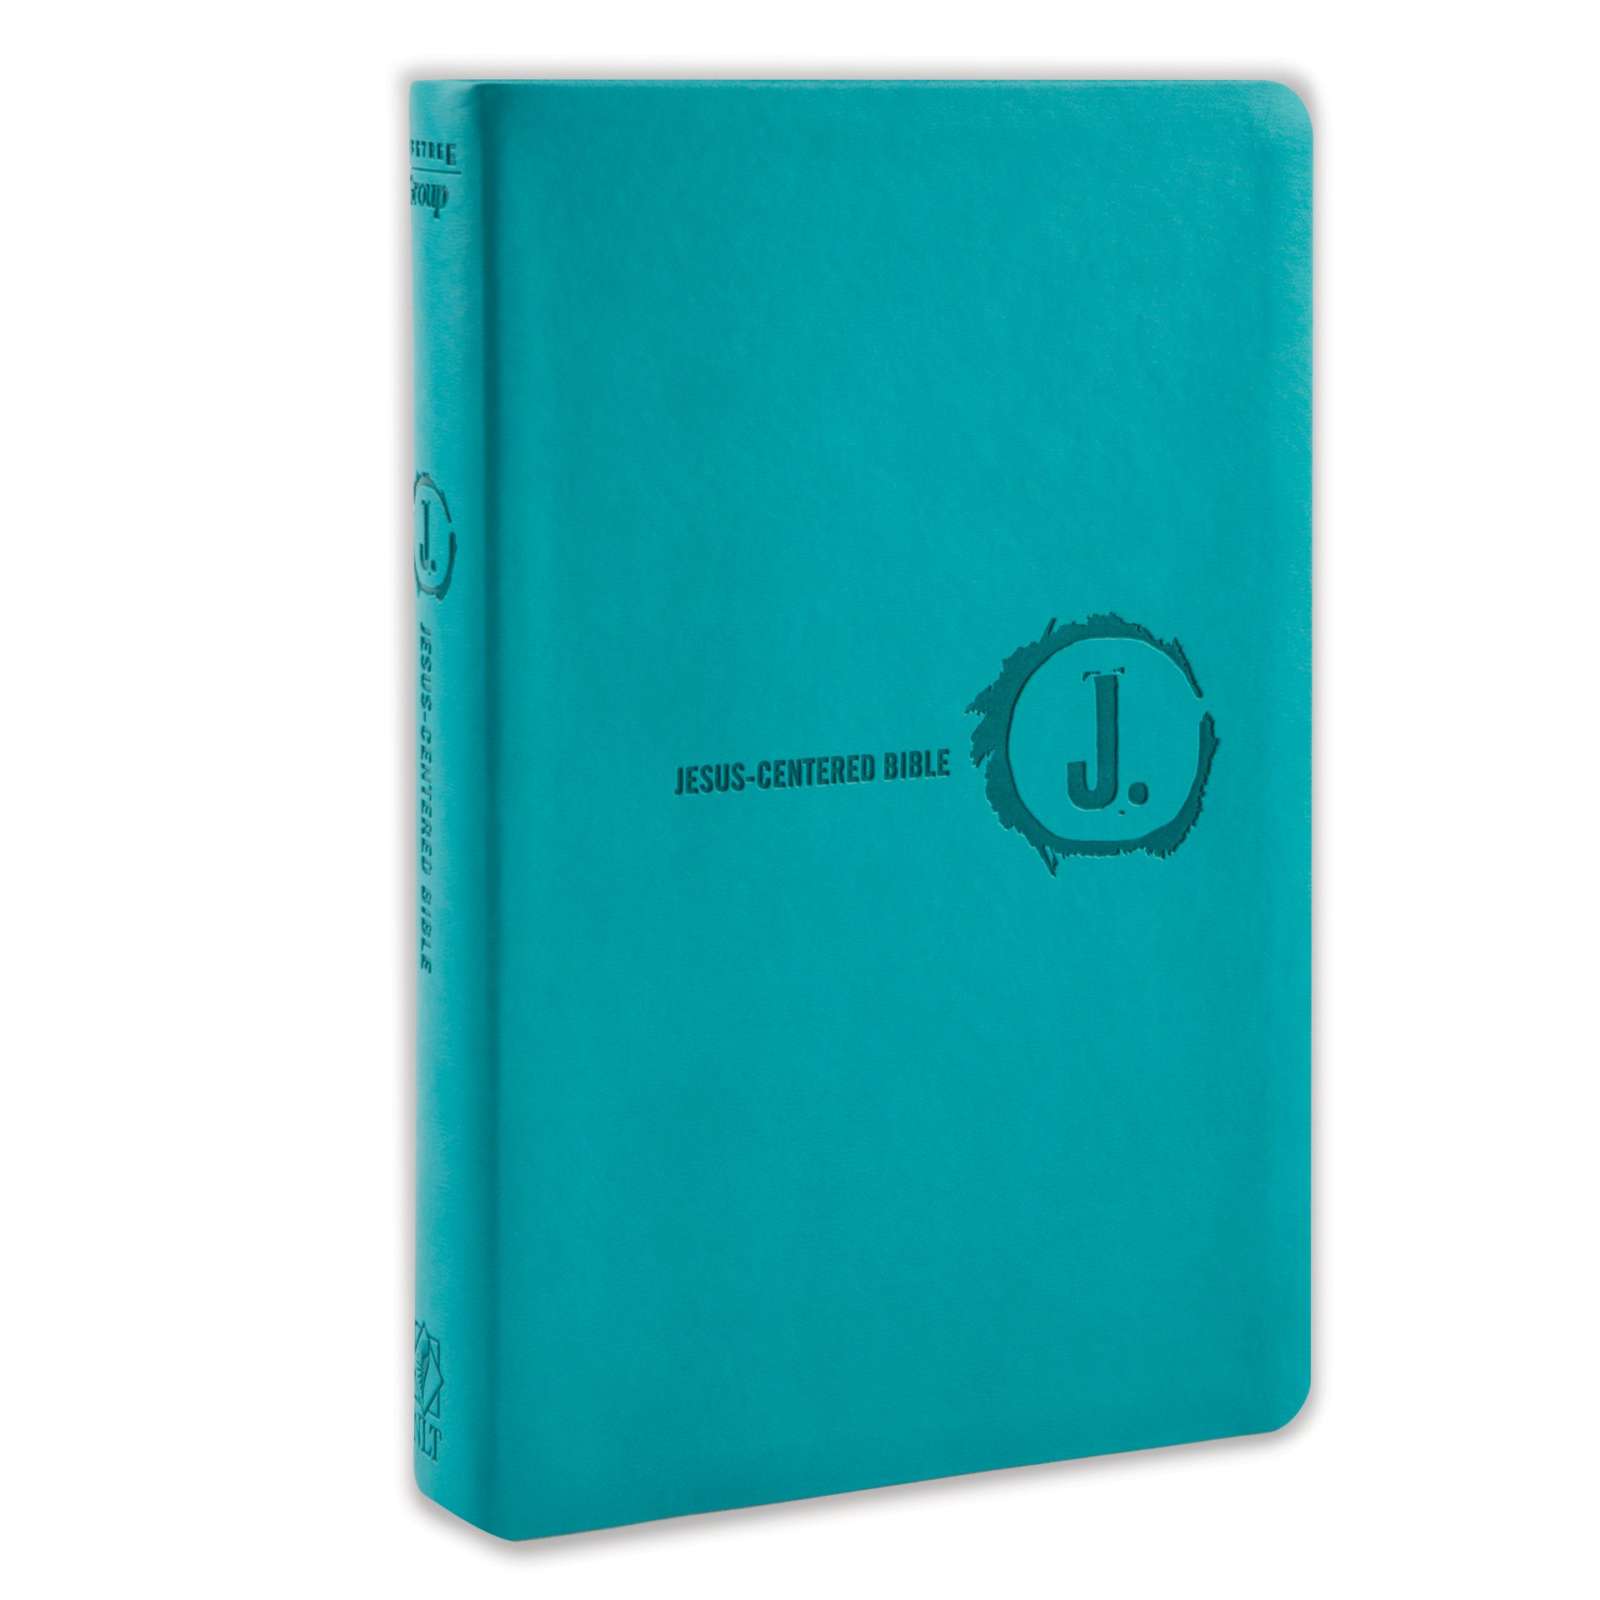 Jesus-Centered Bible NLT, Turquoise